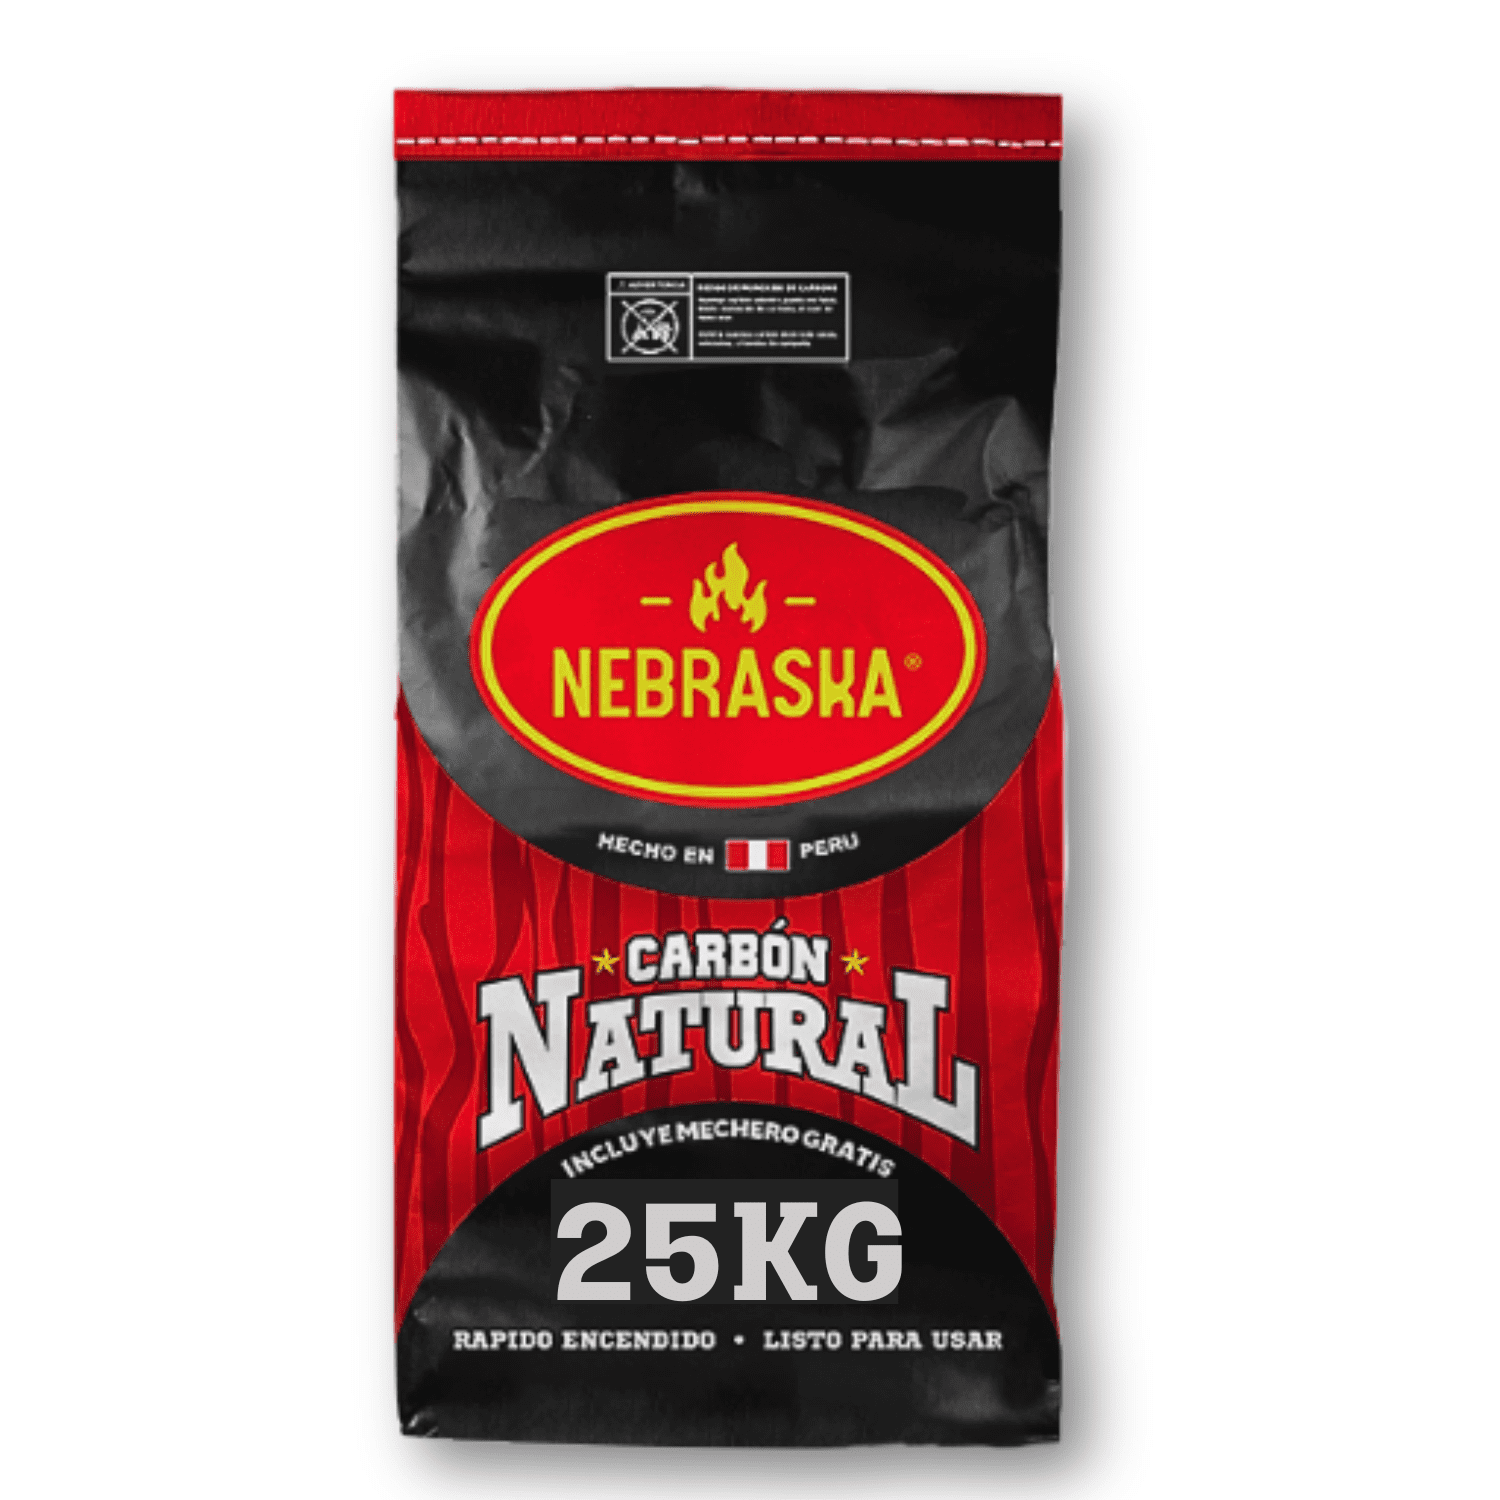 Carbón Nebraska de 25 kilos carbón vegetal de Madera dura